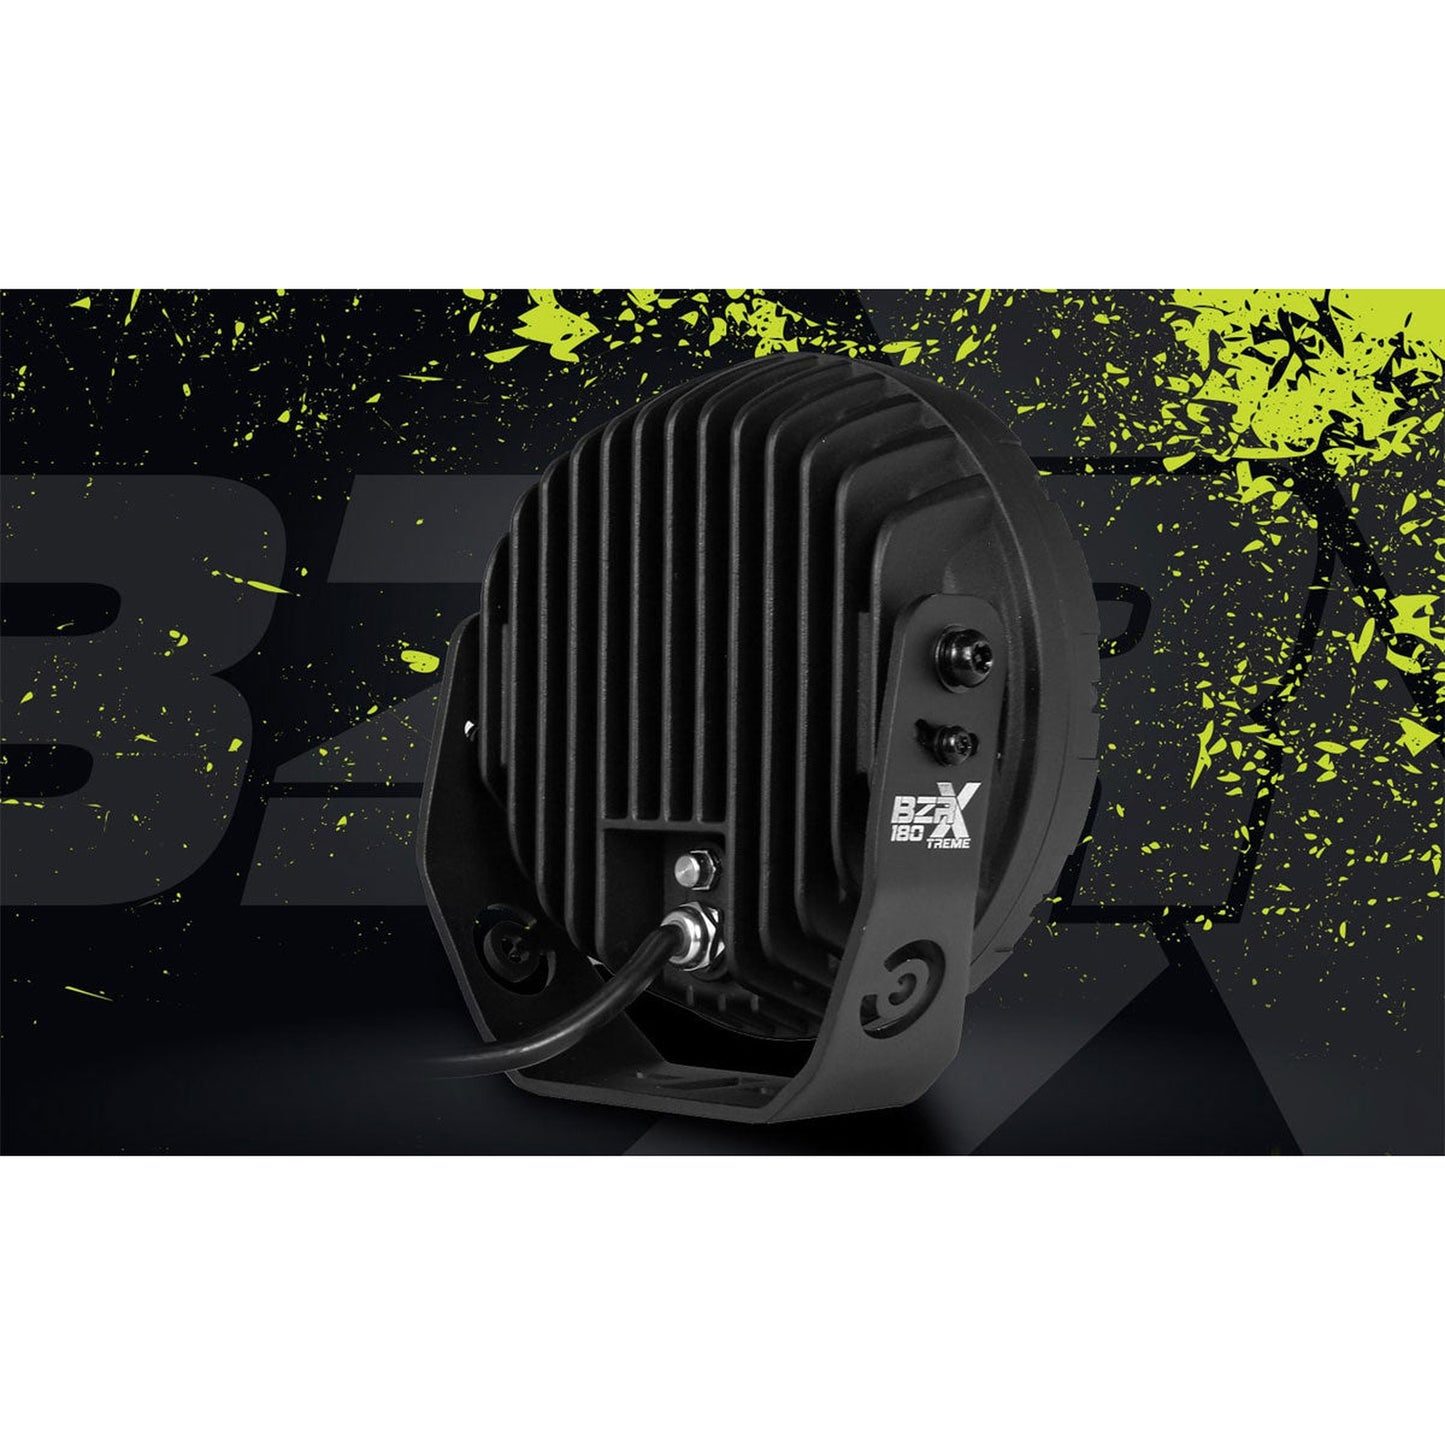 Hard Korr BZR-X Series 7″ LED Driving Lights (Pair W/Harness)